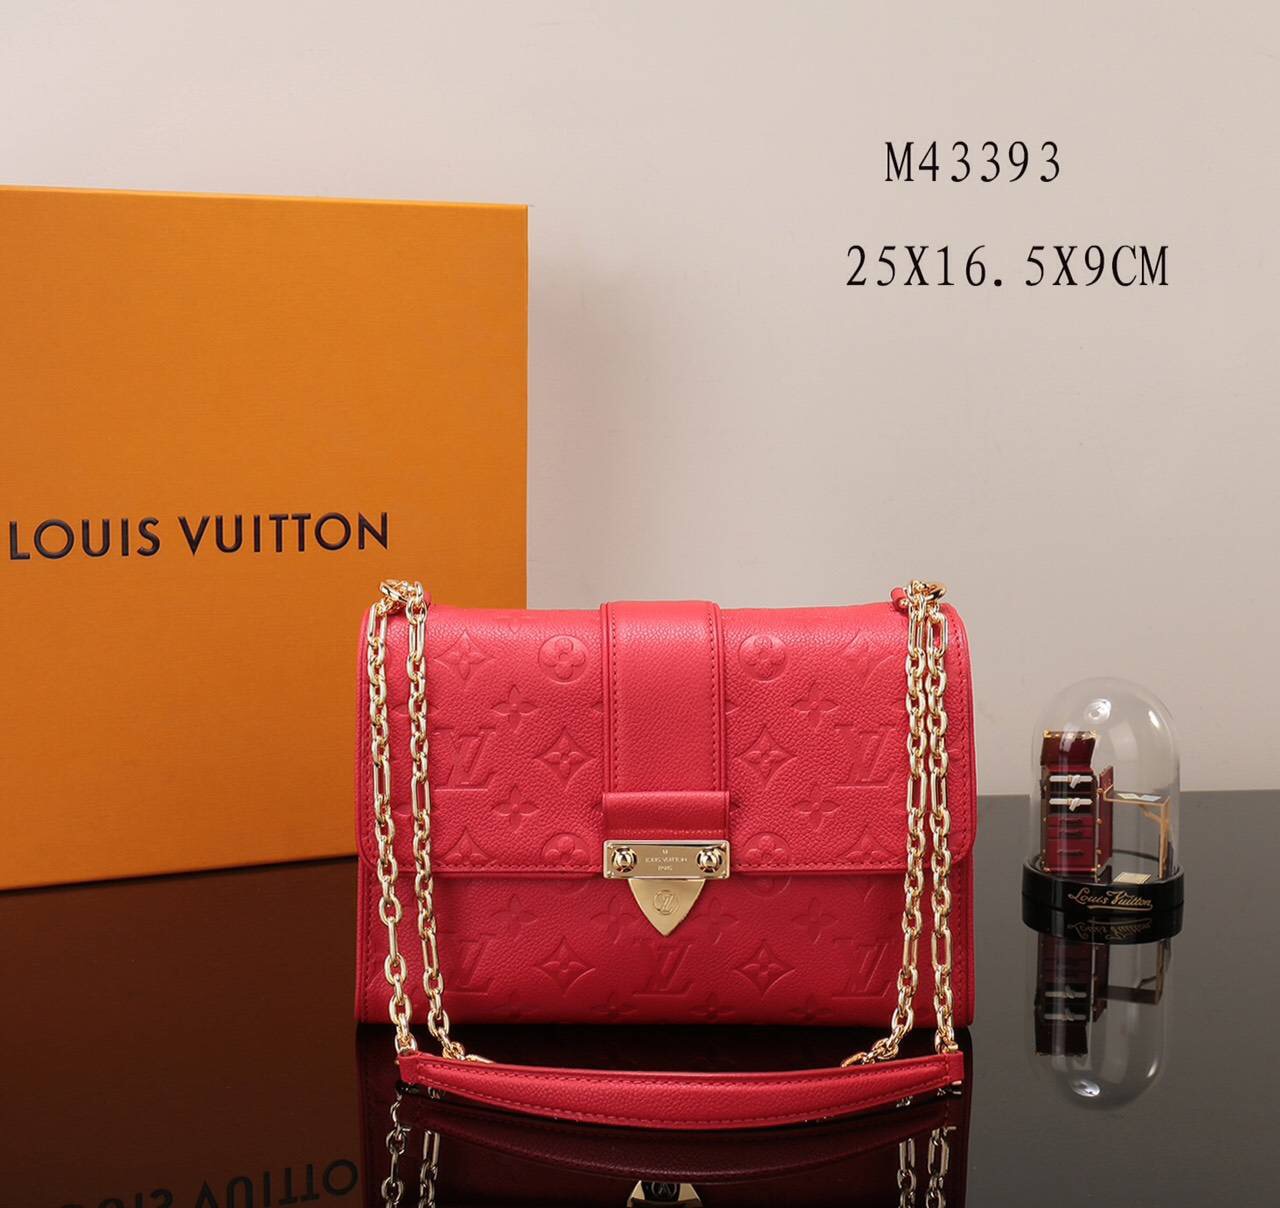 LV Louis Vuitton Saint Sulpice Monogram Real M43393 Leather Handbags bags Red